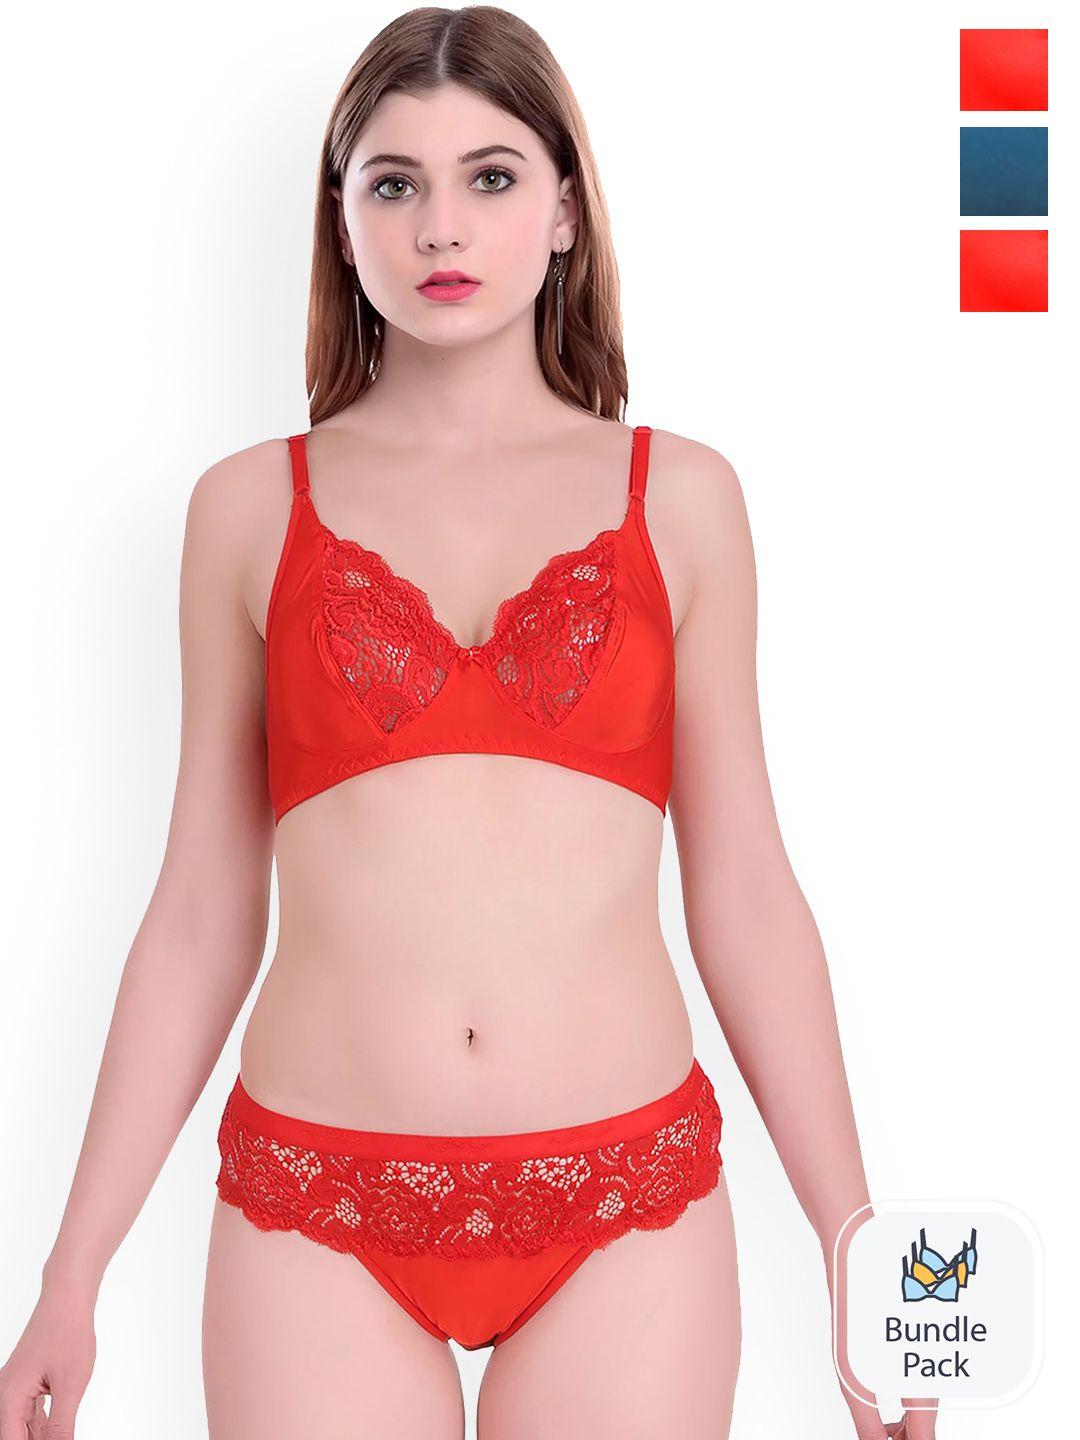 aamarsh pack of 3 self-designed cotton lingerie set ap_q_cate set _blue,red,red_30